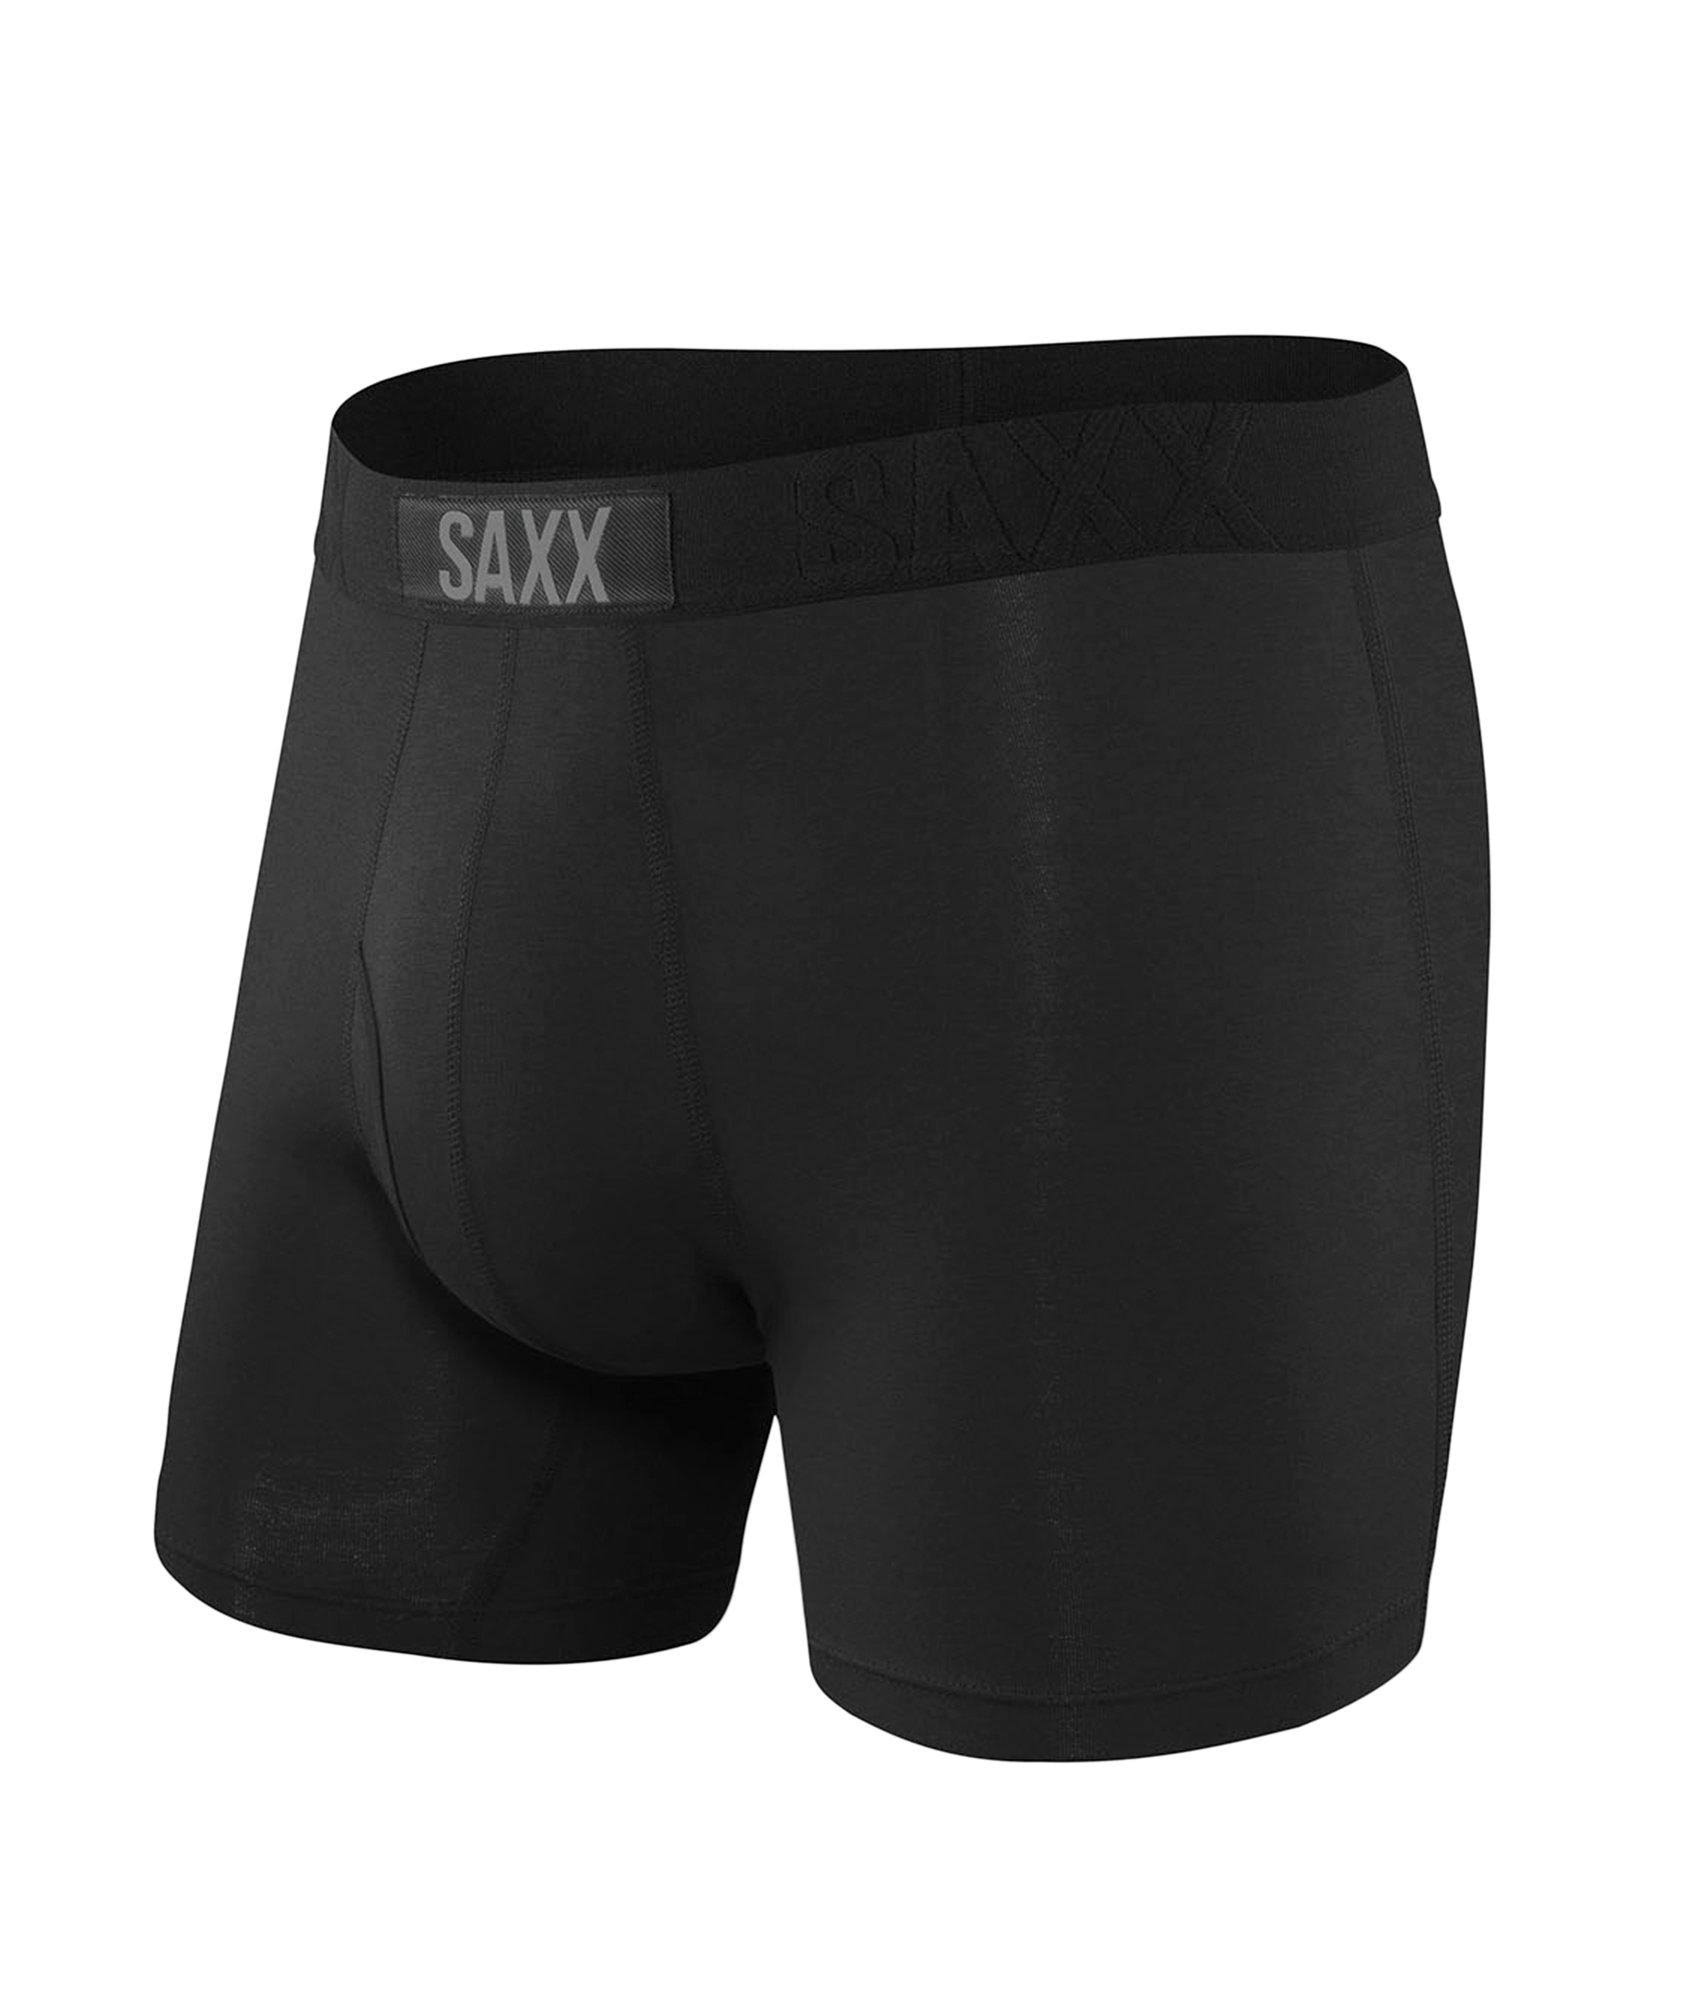 Saxx Underwear Co Black Ultra Fly Boxer Brief